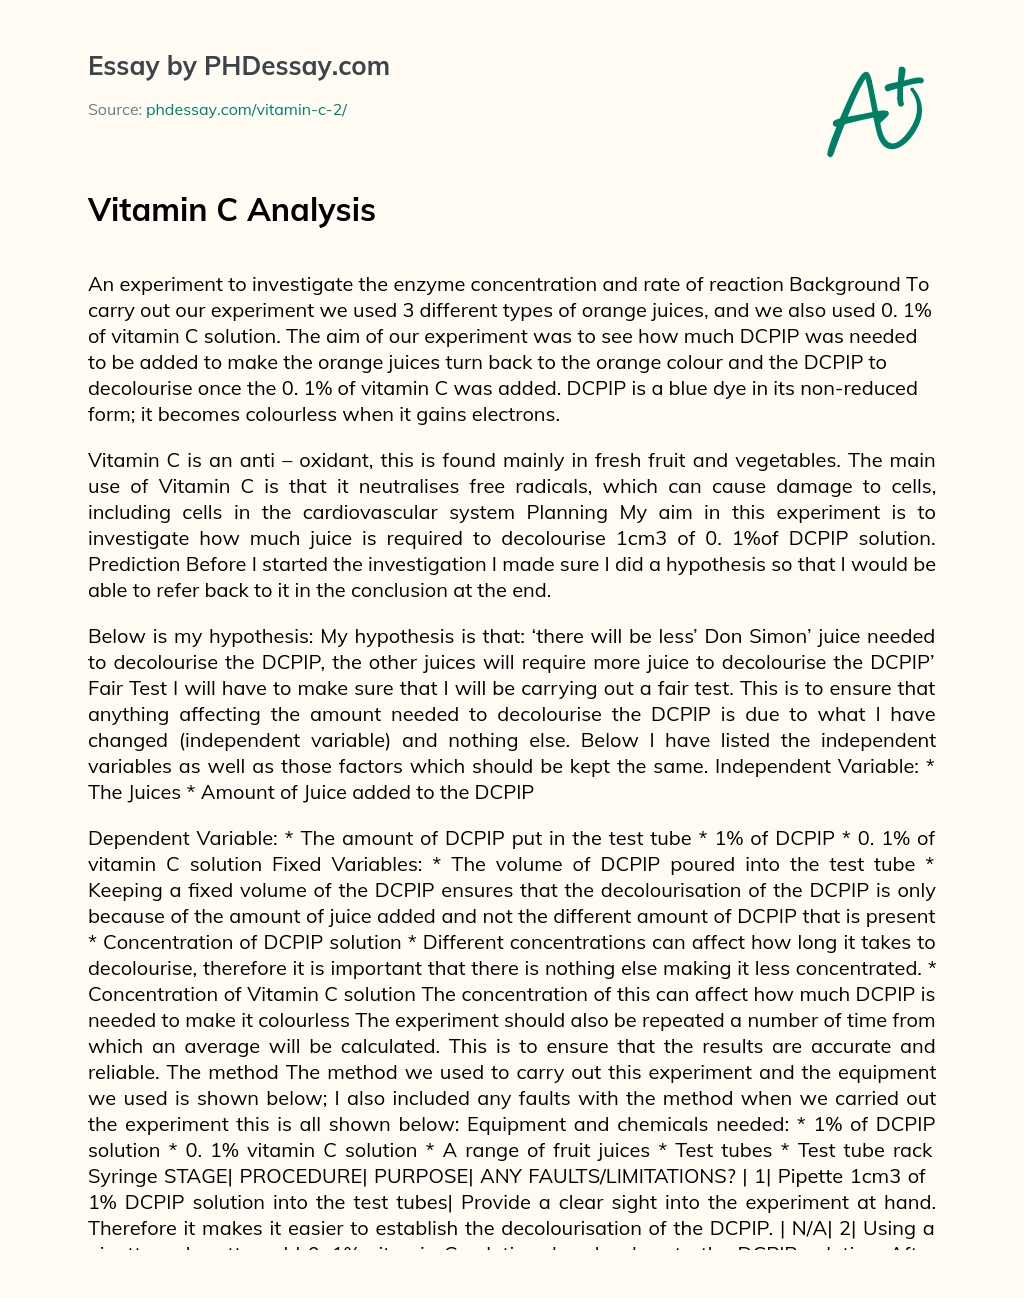 Vitamin C Analysis essay